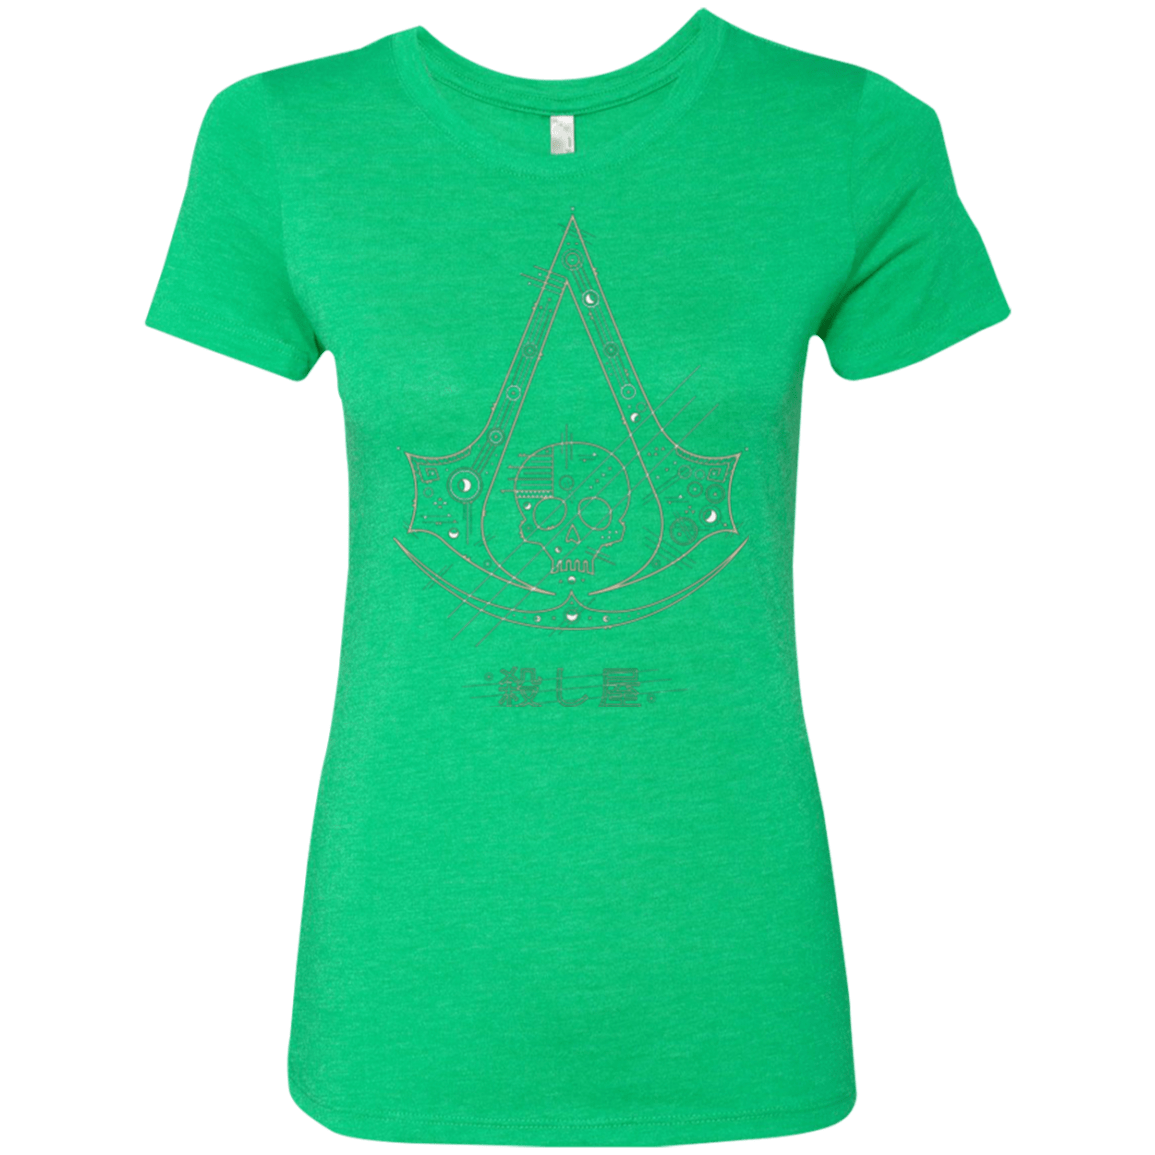 T-Shirts Envy / Small Tech Creed Women's Triblend T-Shirt